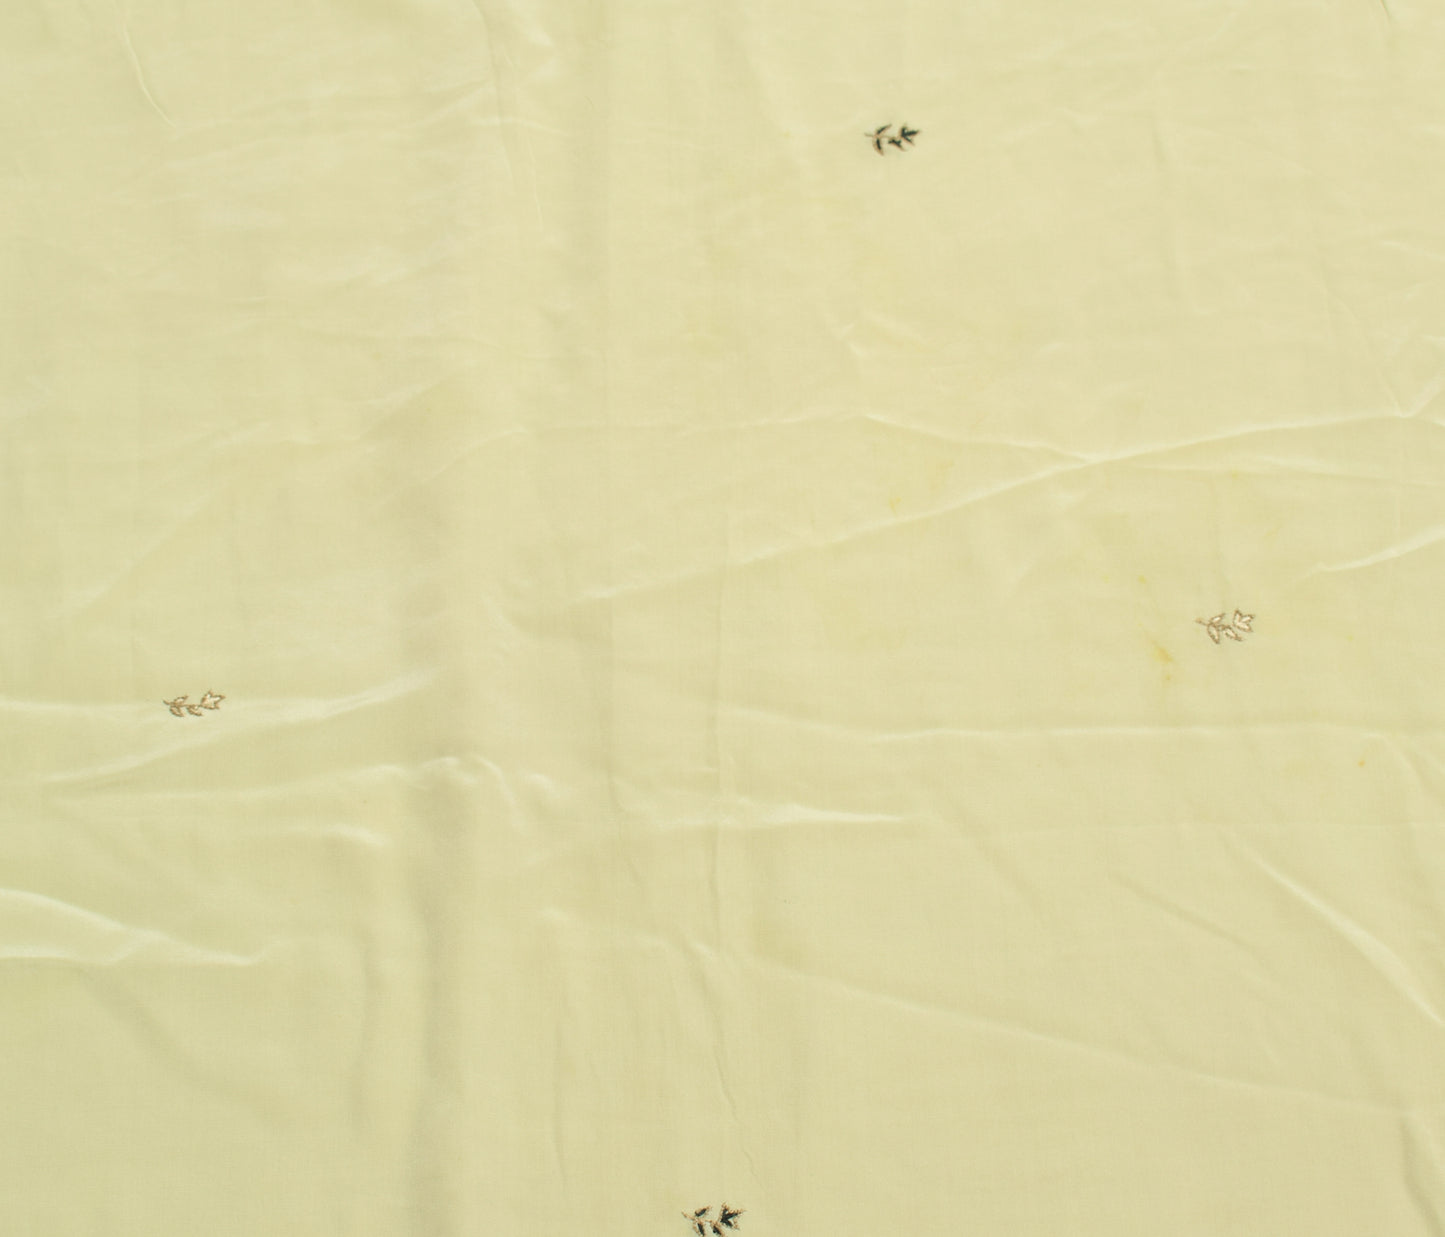 Sushila Vintage Silk Sari Remnant Scrap Multi Purpose Embroidered Craft Fabric